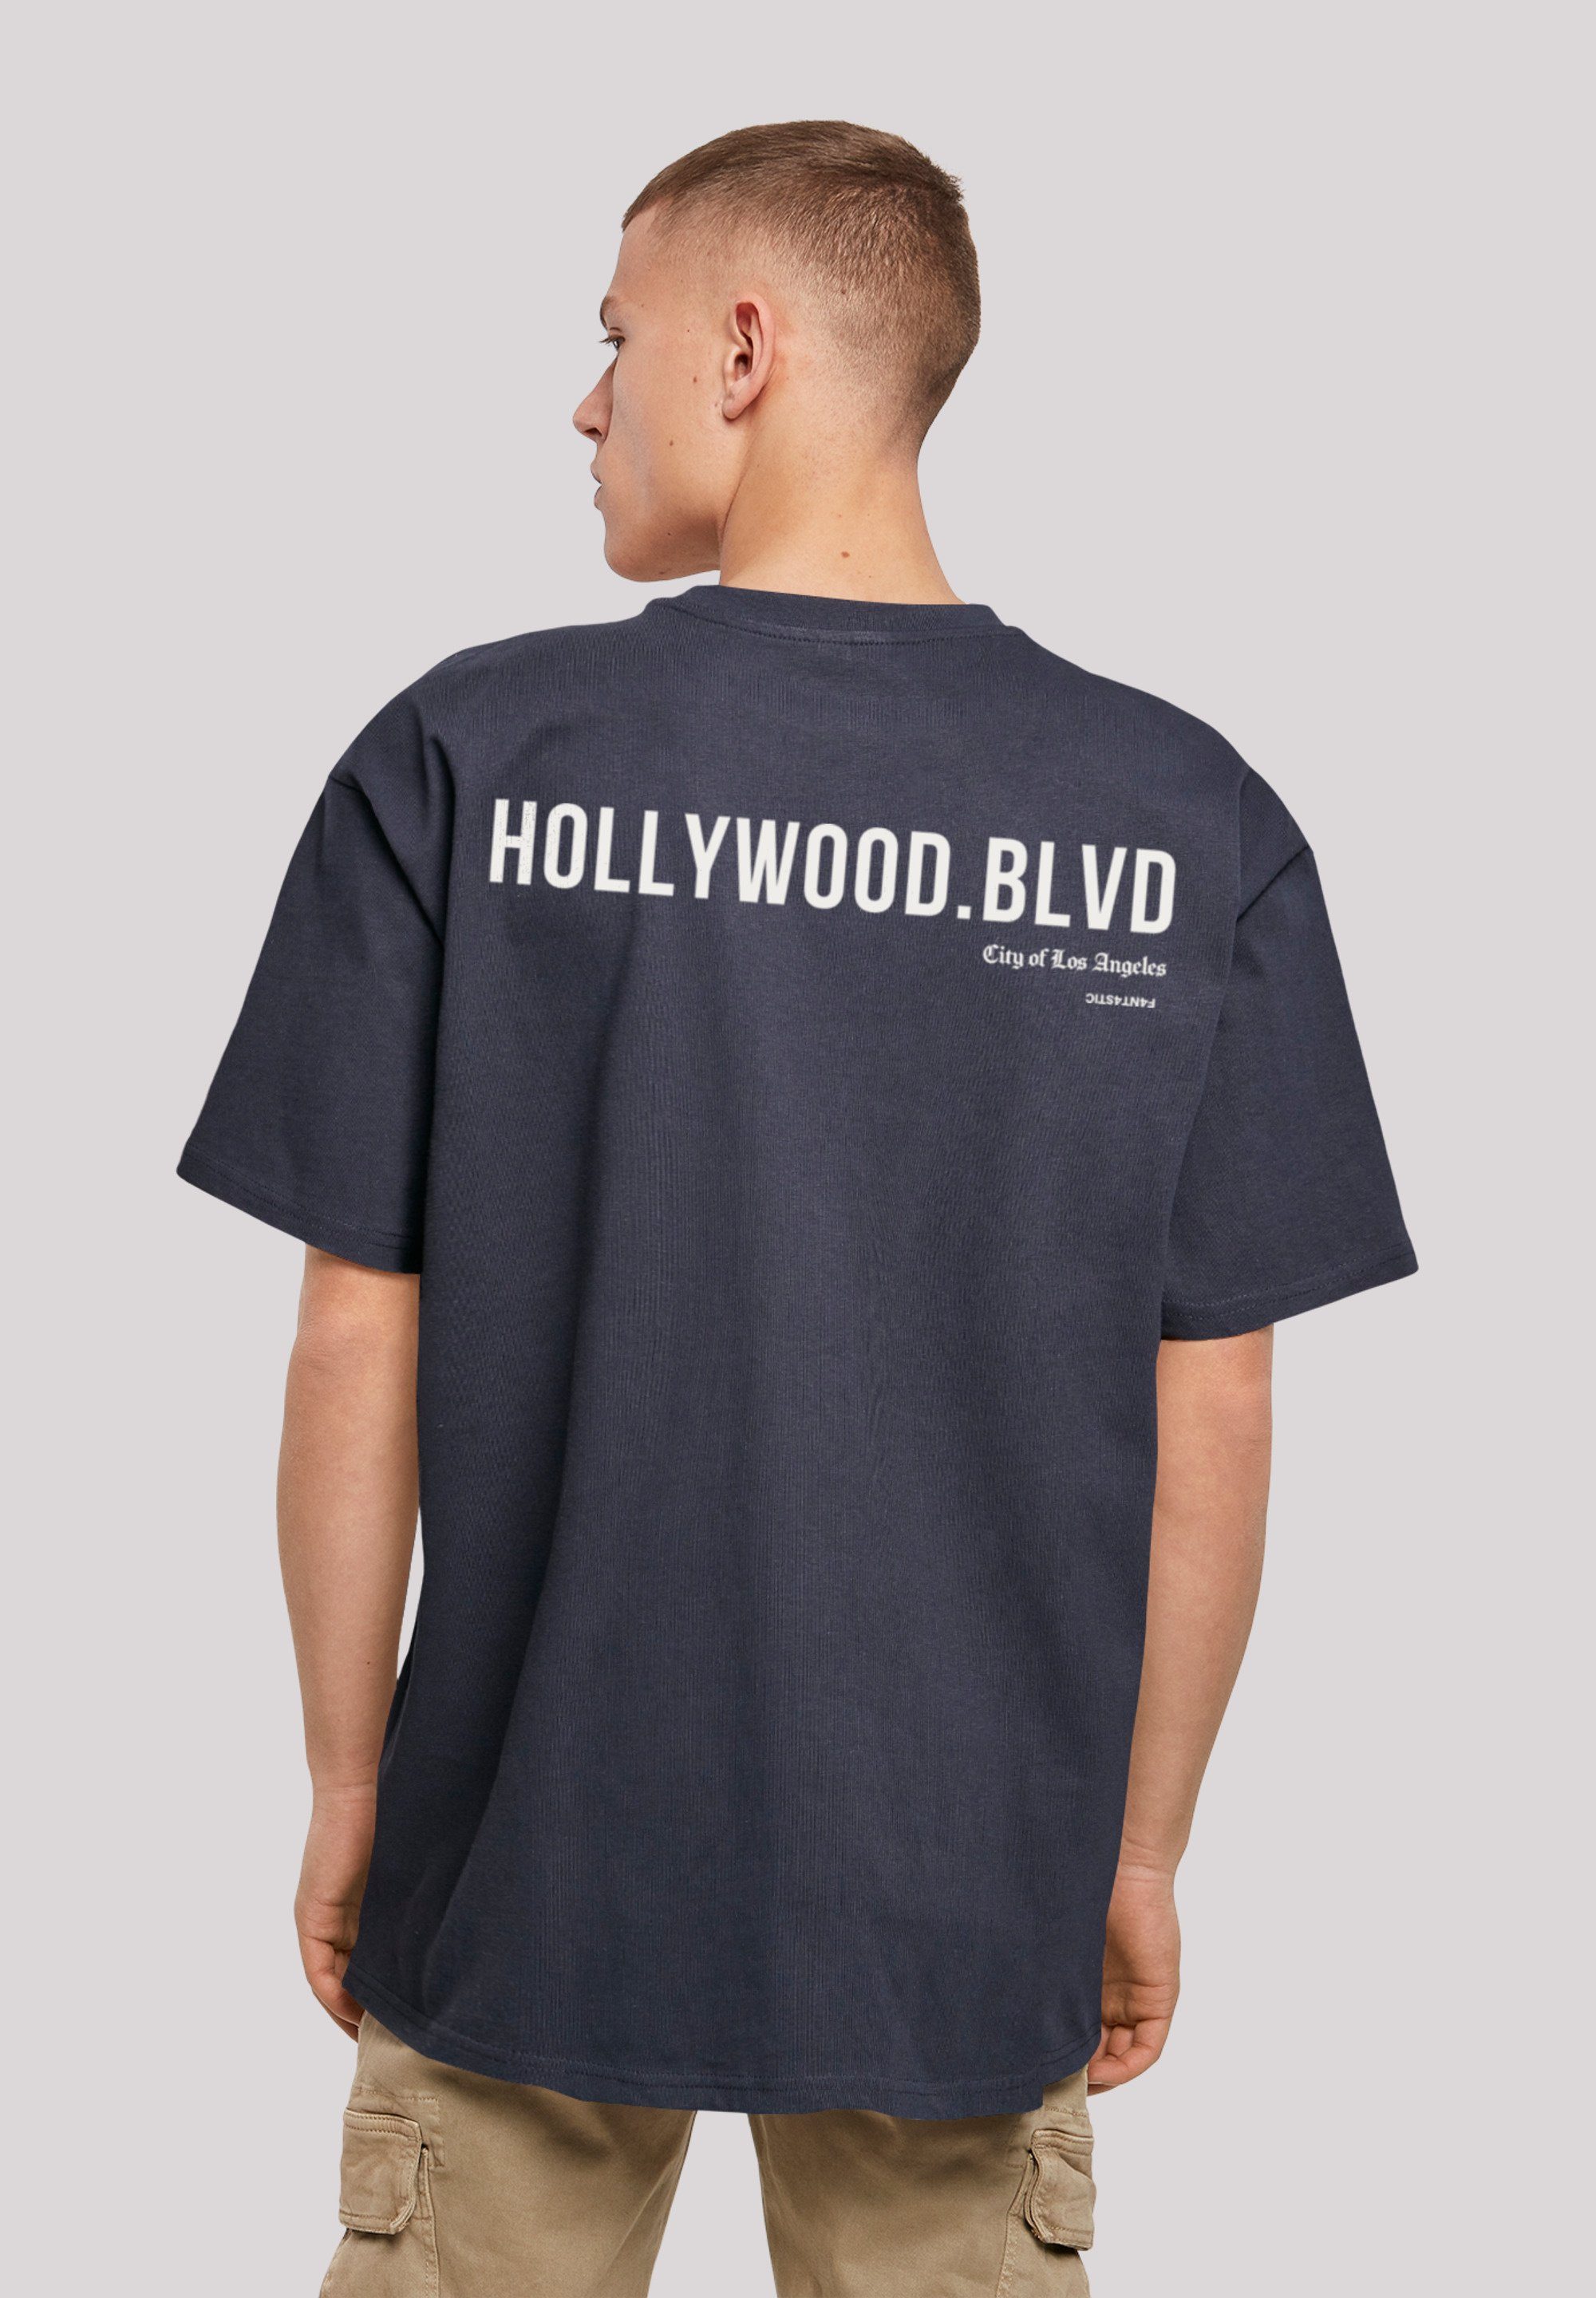 OVERSIZE Print F4NT4STIC navy blvd TEE T-Shirt Hollywood